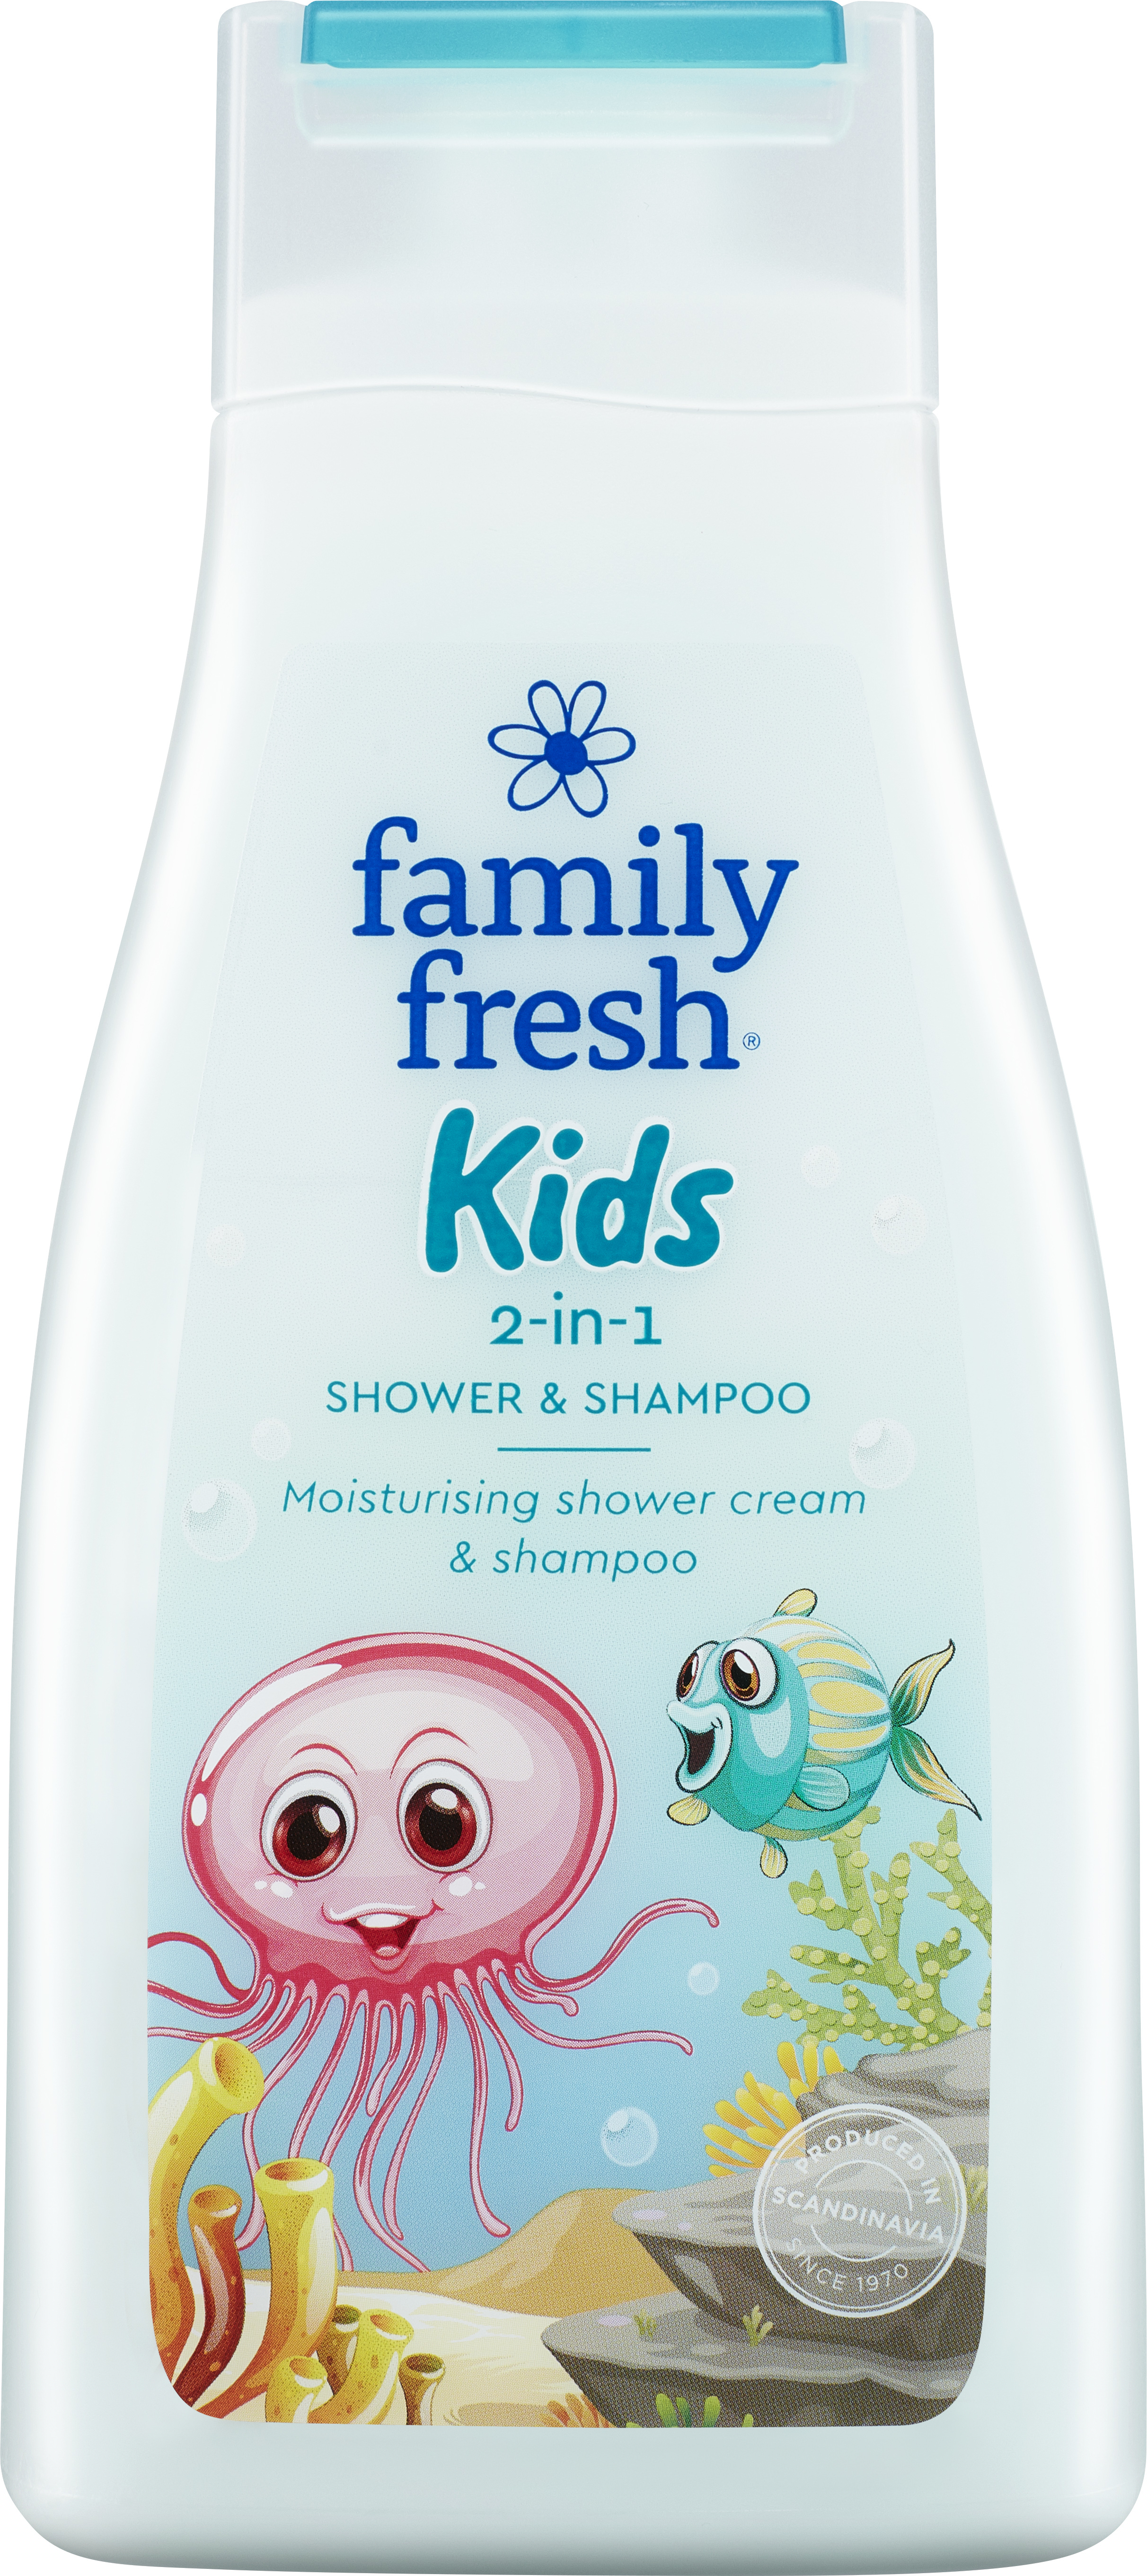 Family Fresh Kids Shower and Shampoo